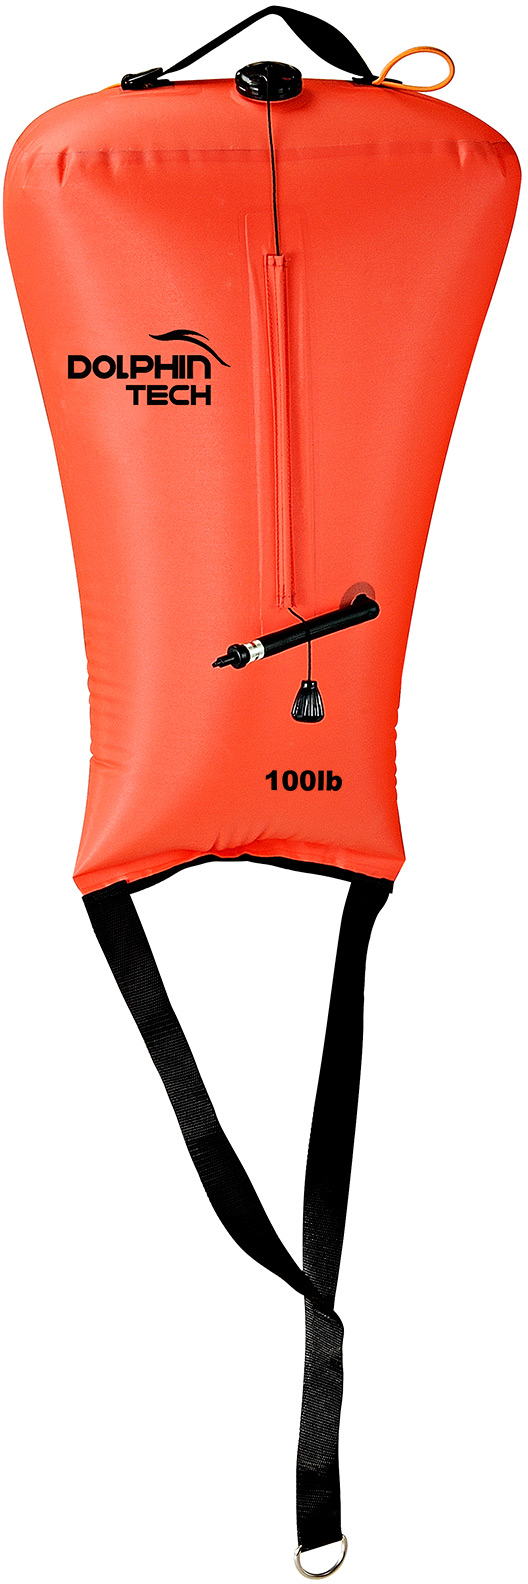 Dolphin Tech By IST 100lb Lift Bag w/210D TPU Coated Nylon